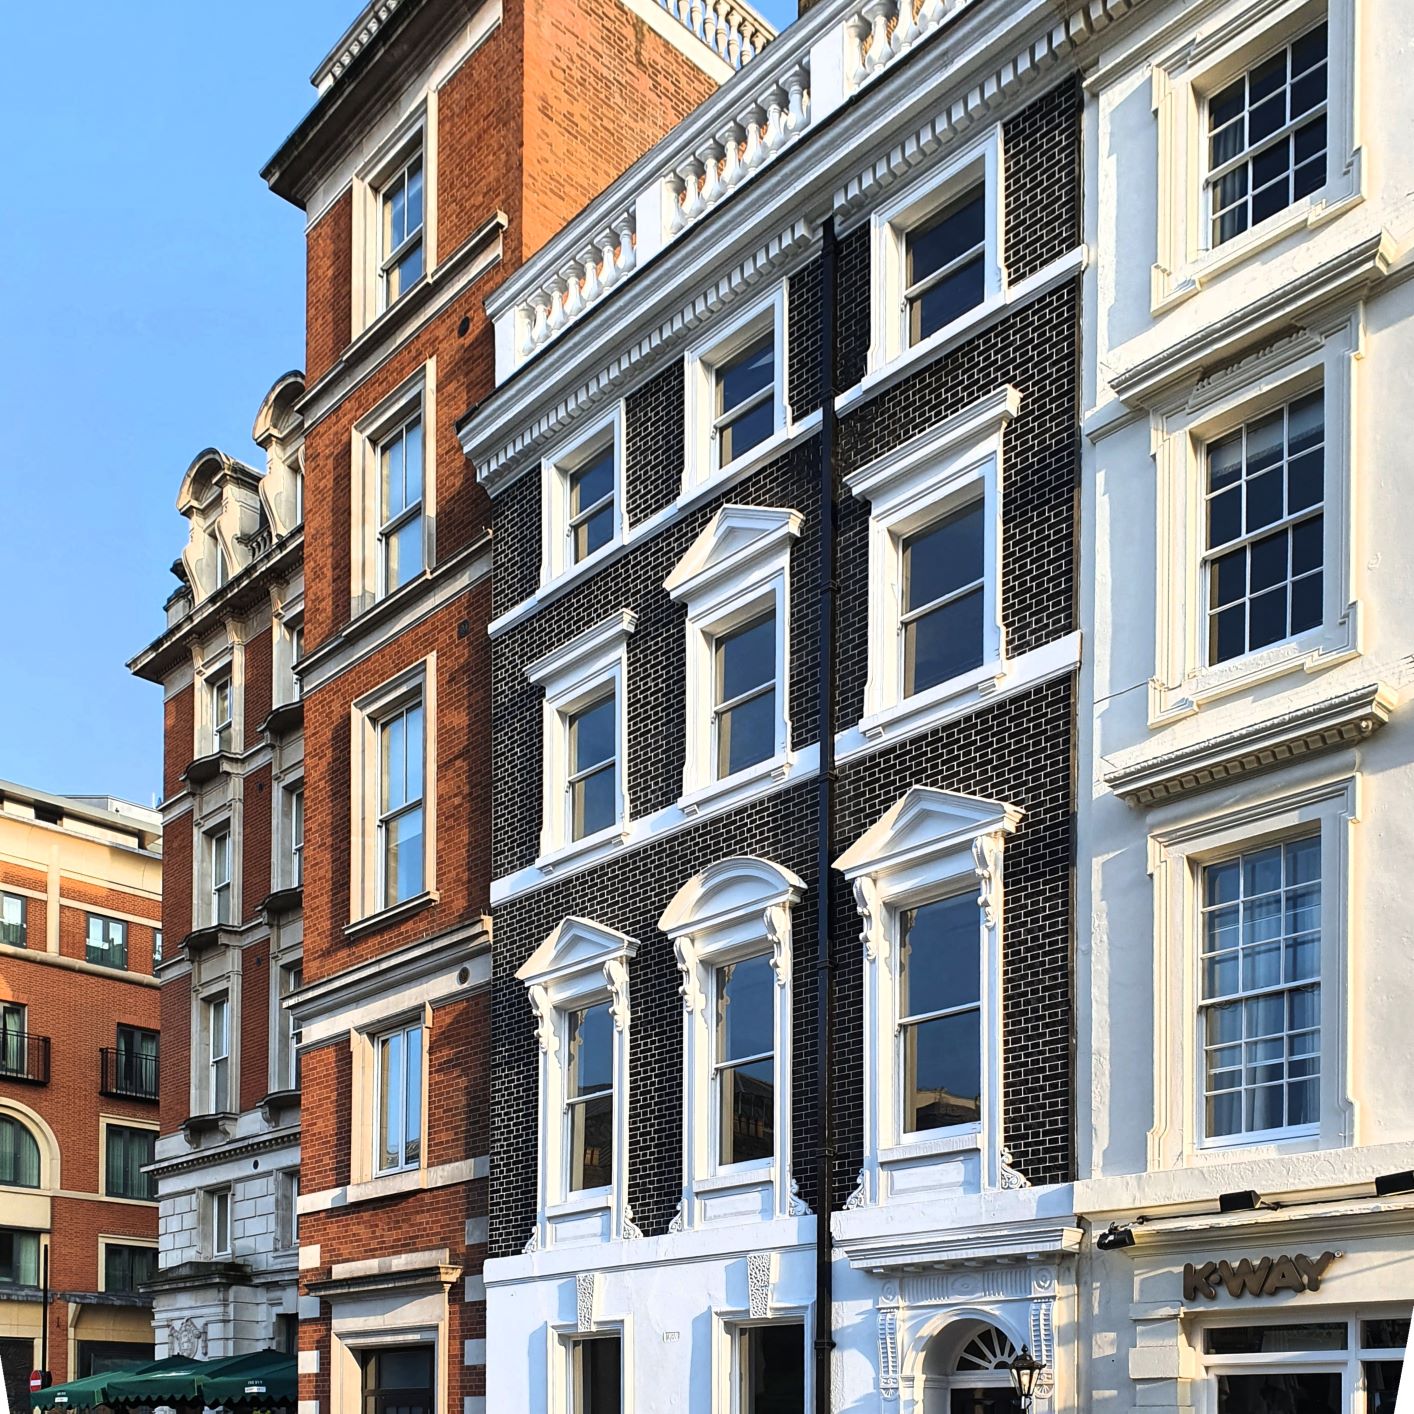 No.3 Henrietta Street, Covent Garden